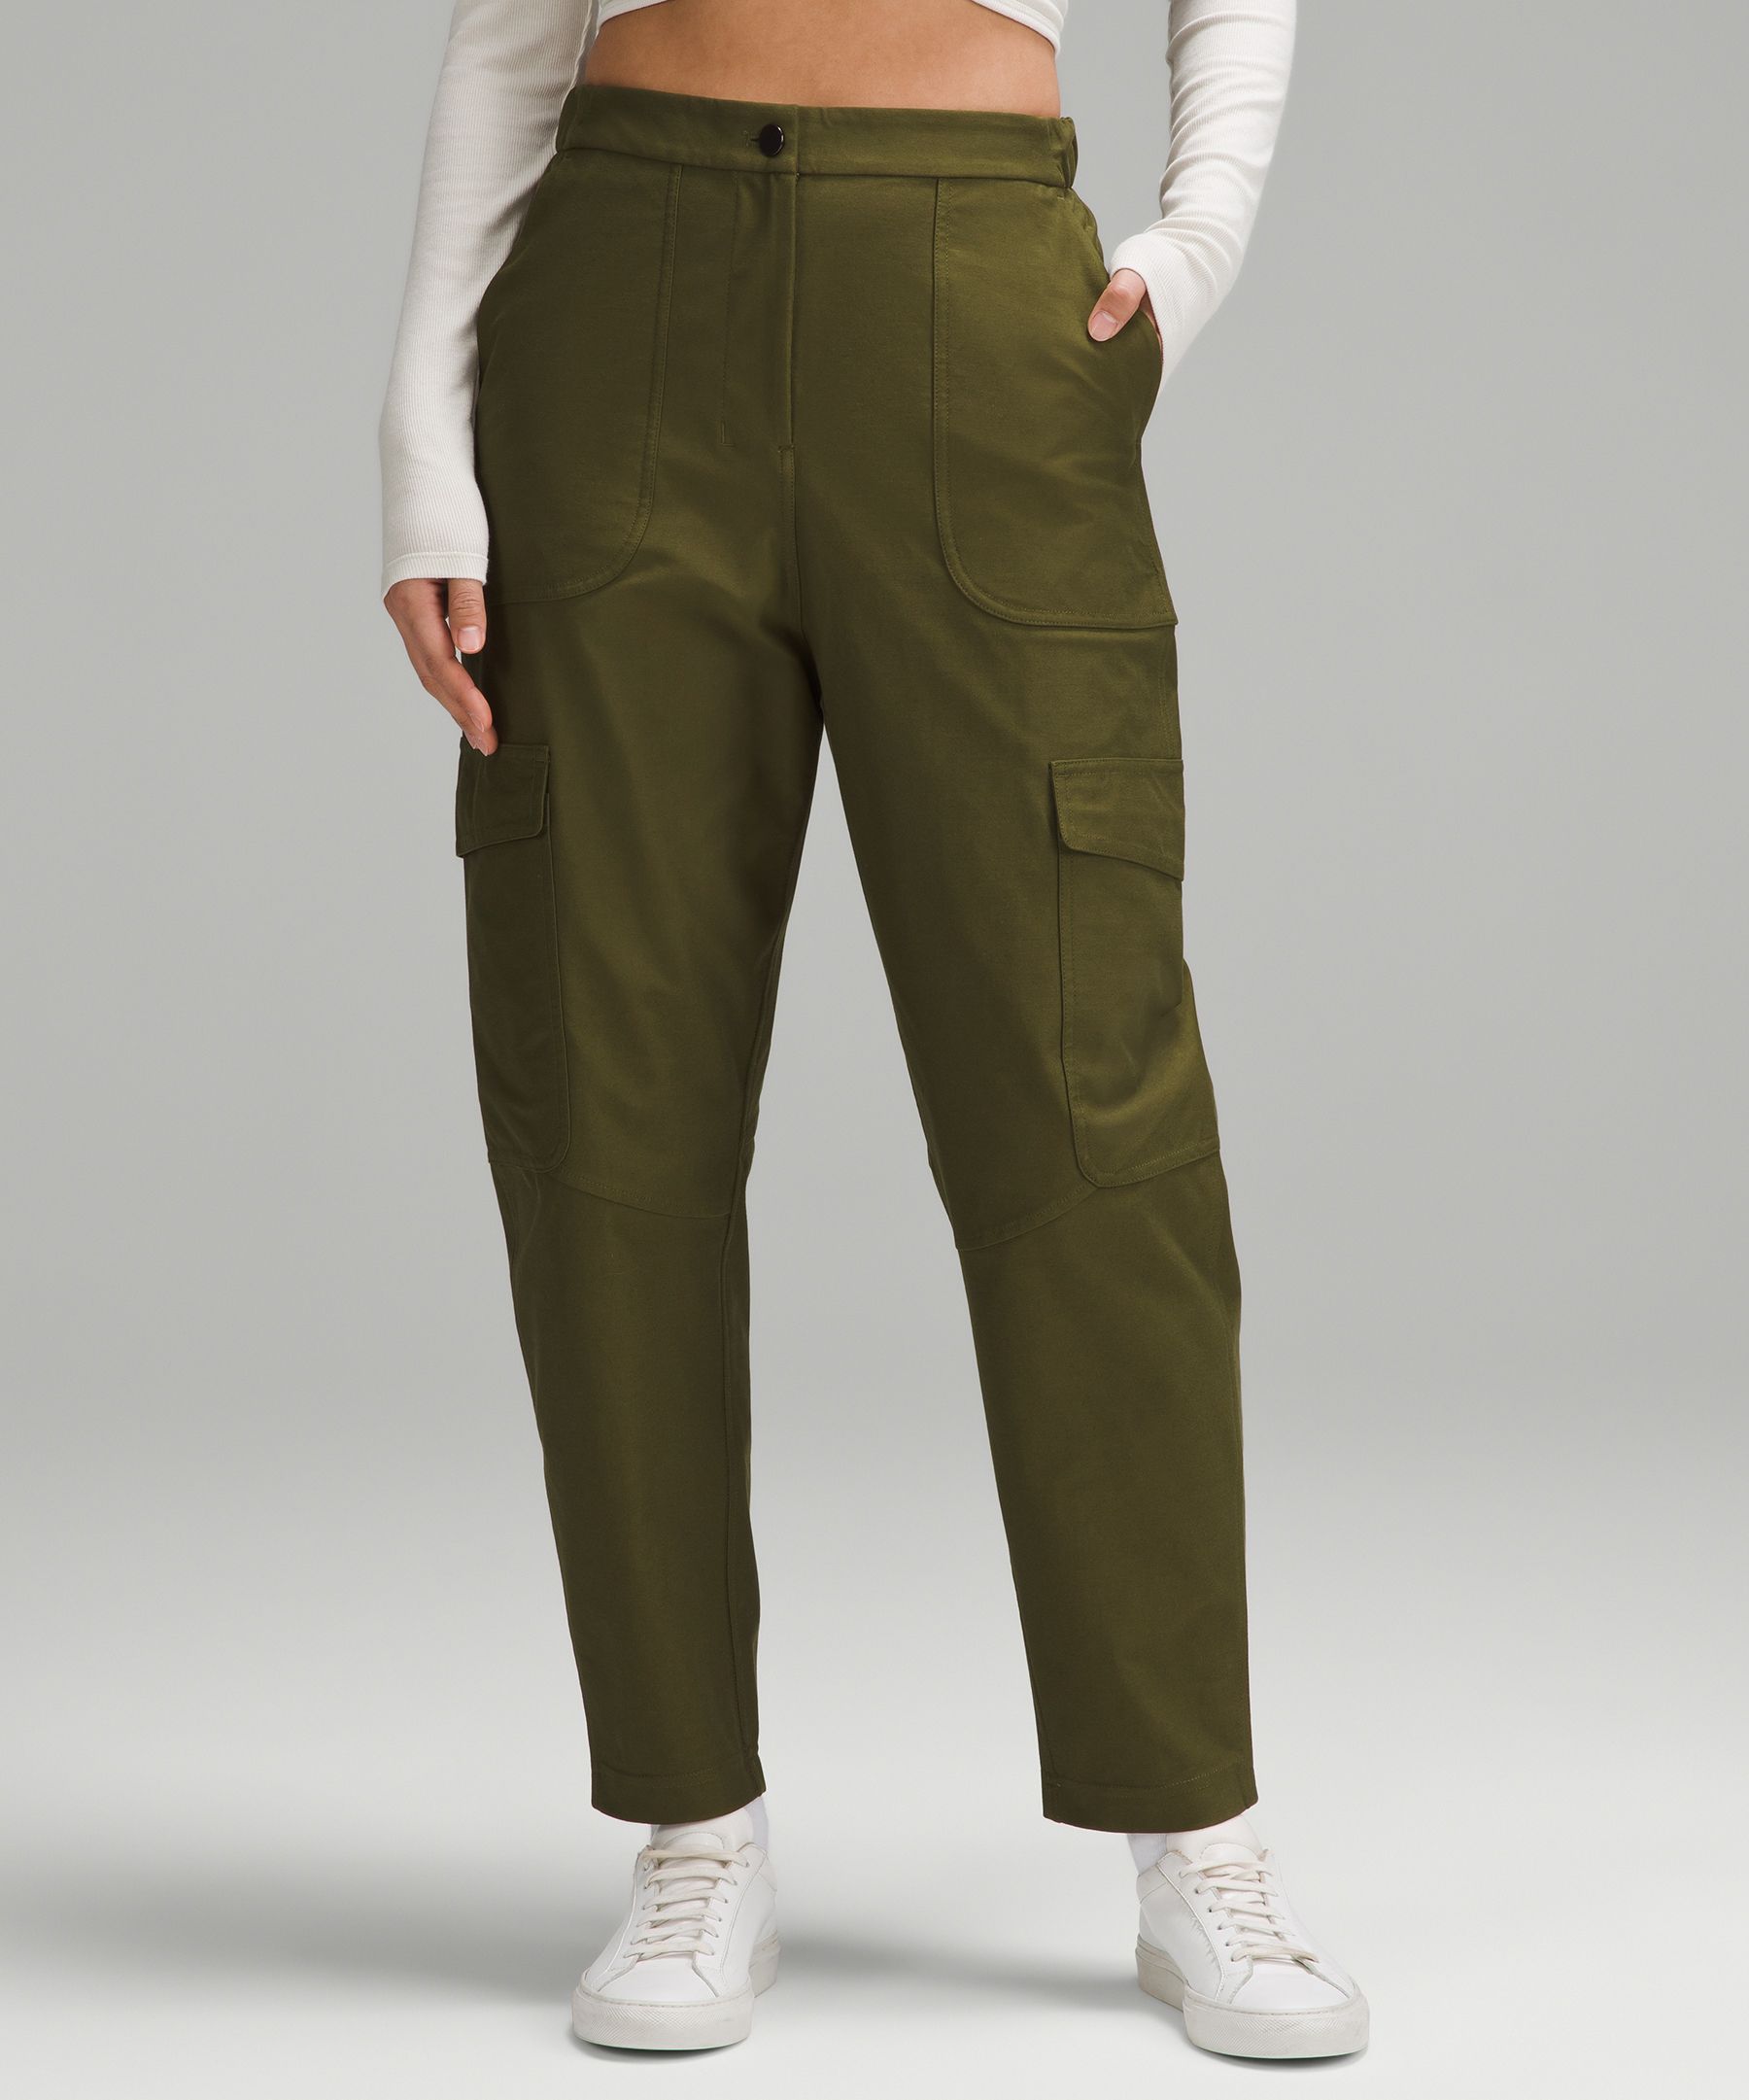 Lululemon Cargo Pants Womens Size 28 x 27 Utilitech Pocket High Rise $148  NEW